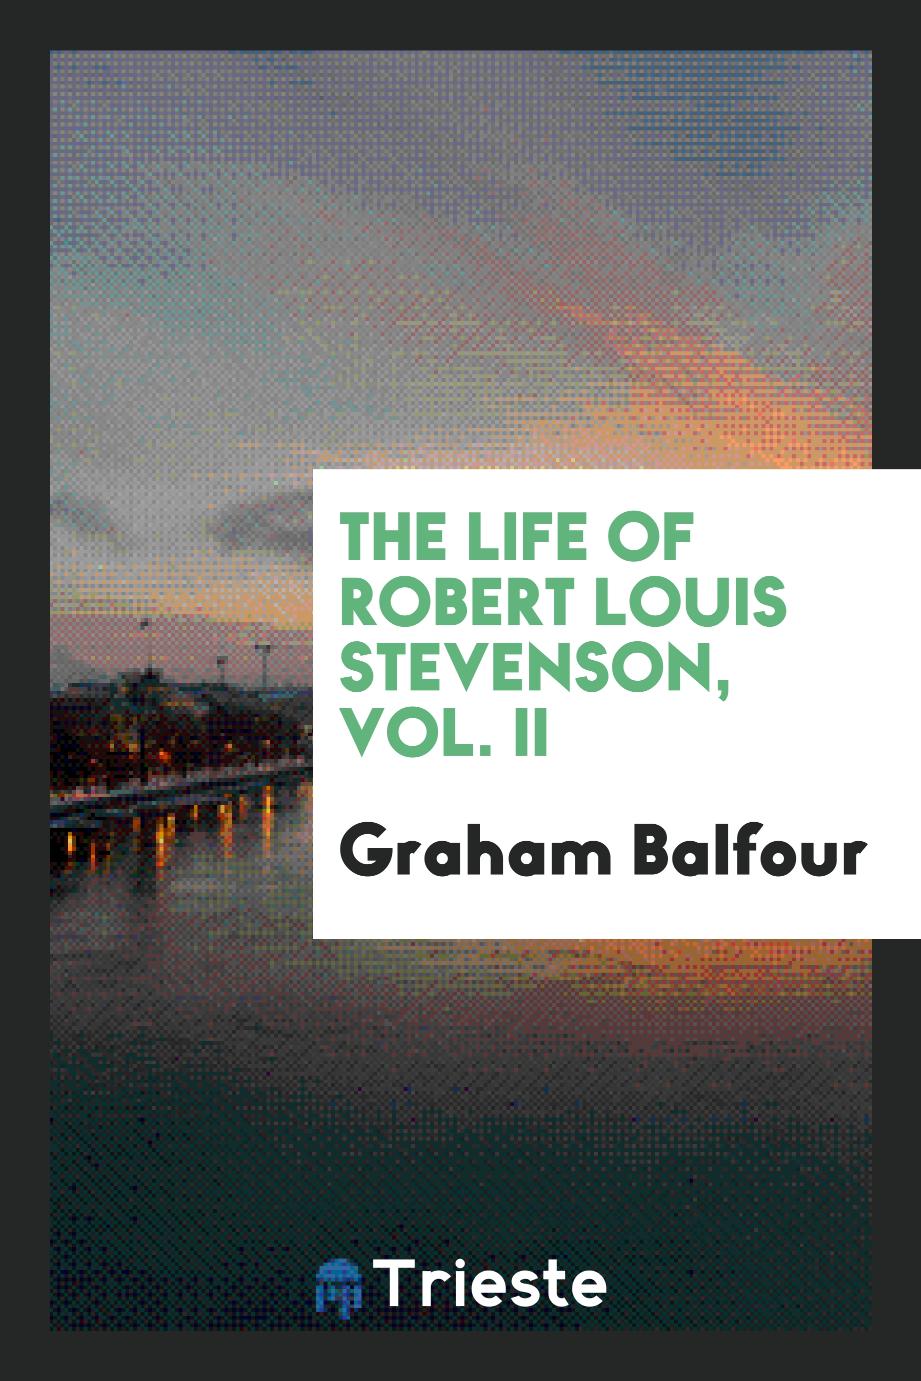 The life of Robert Louis Stevenson, Vol. II